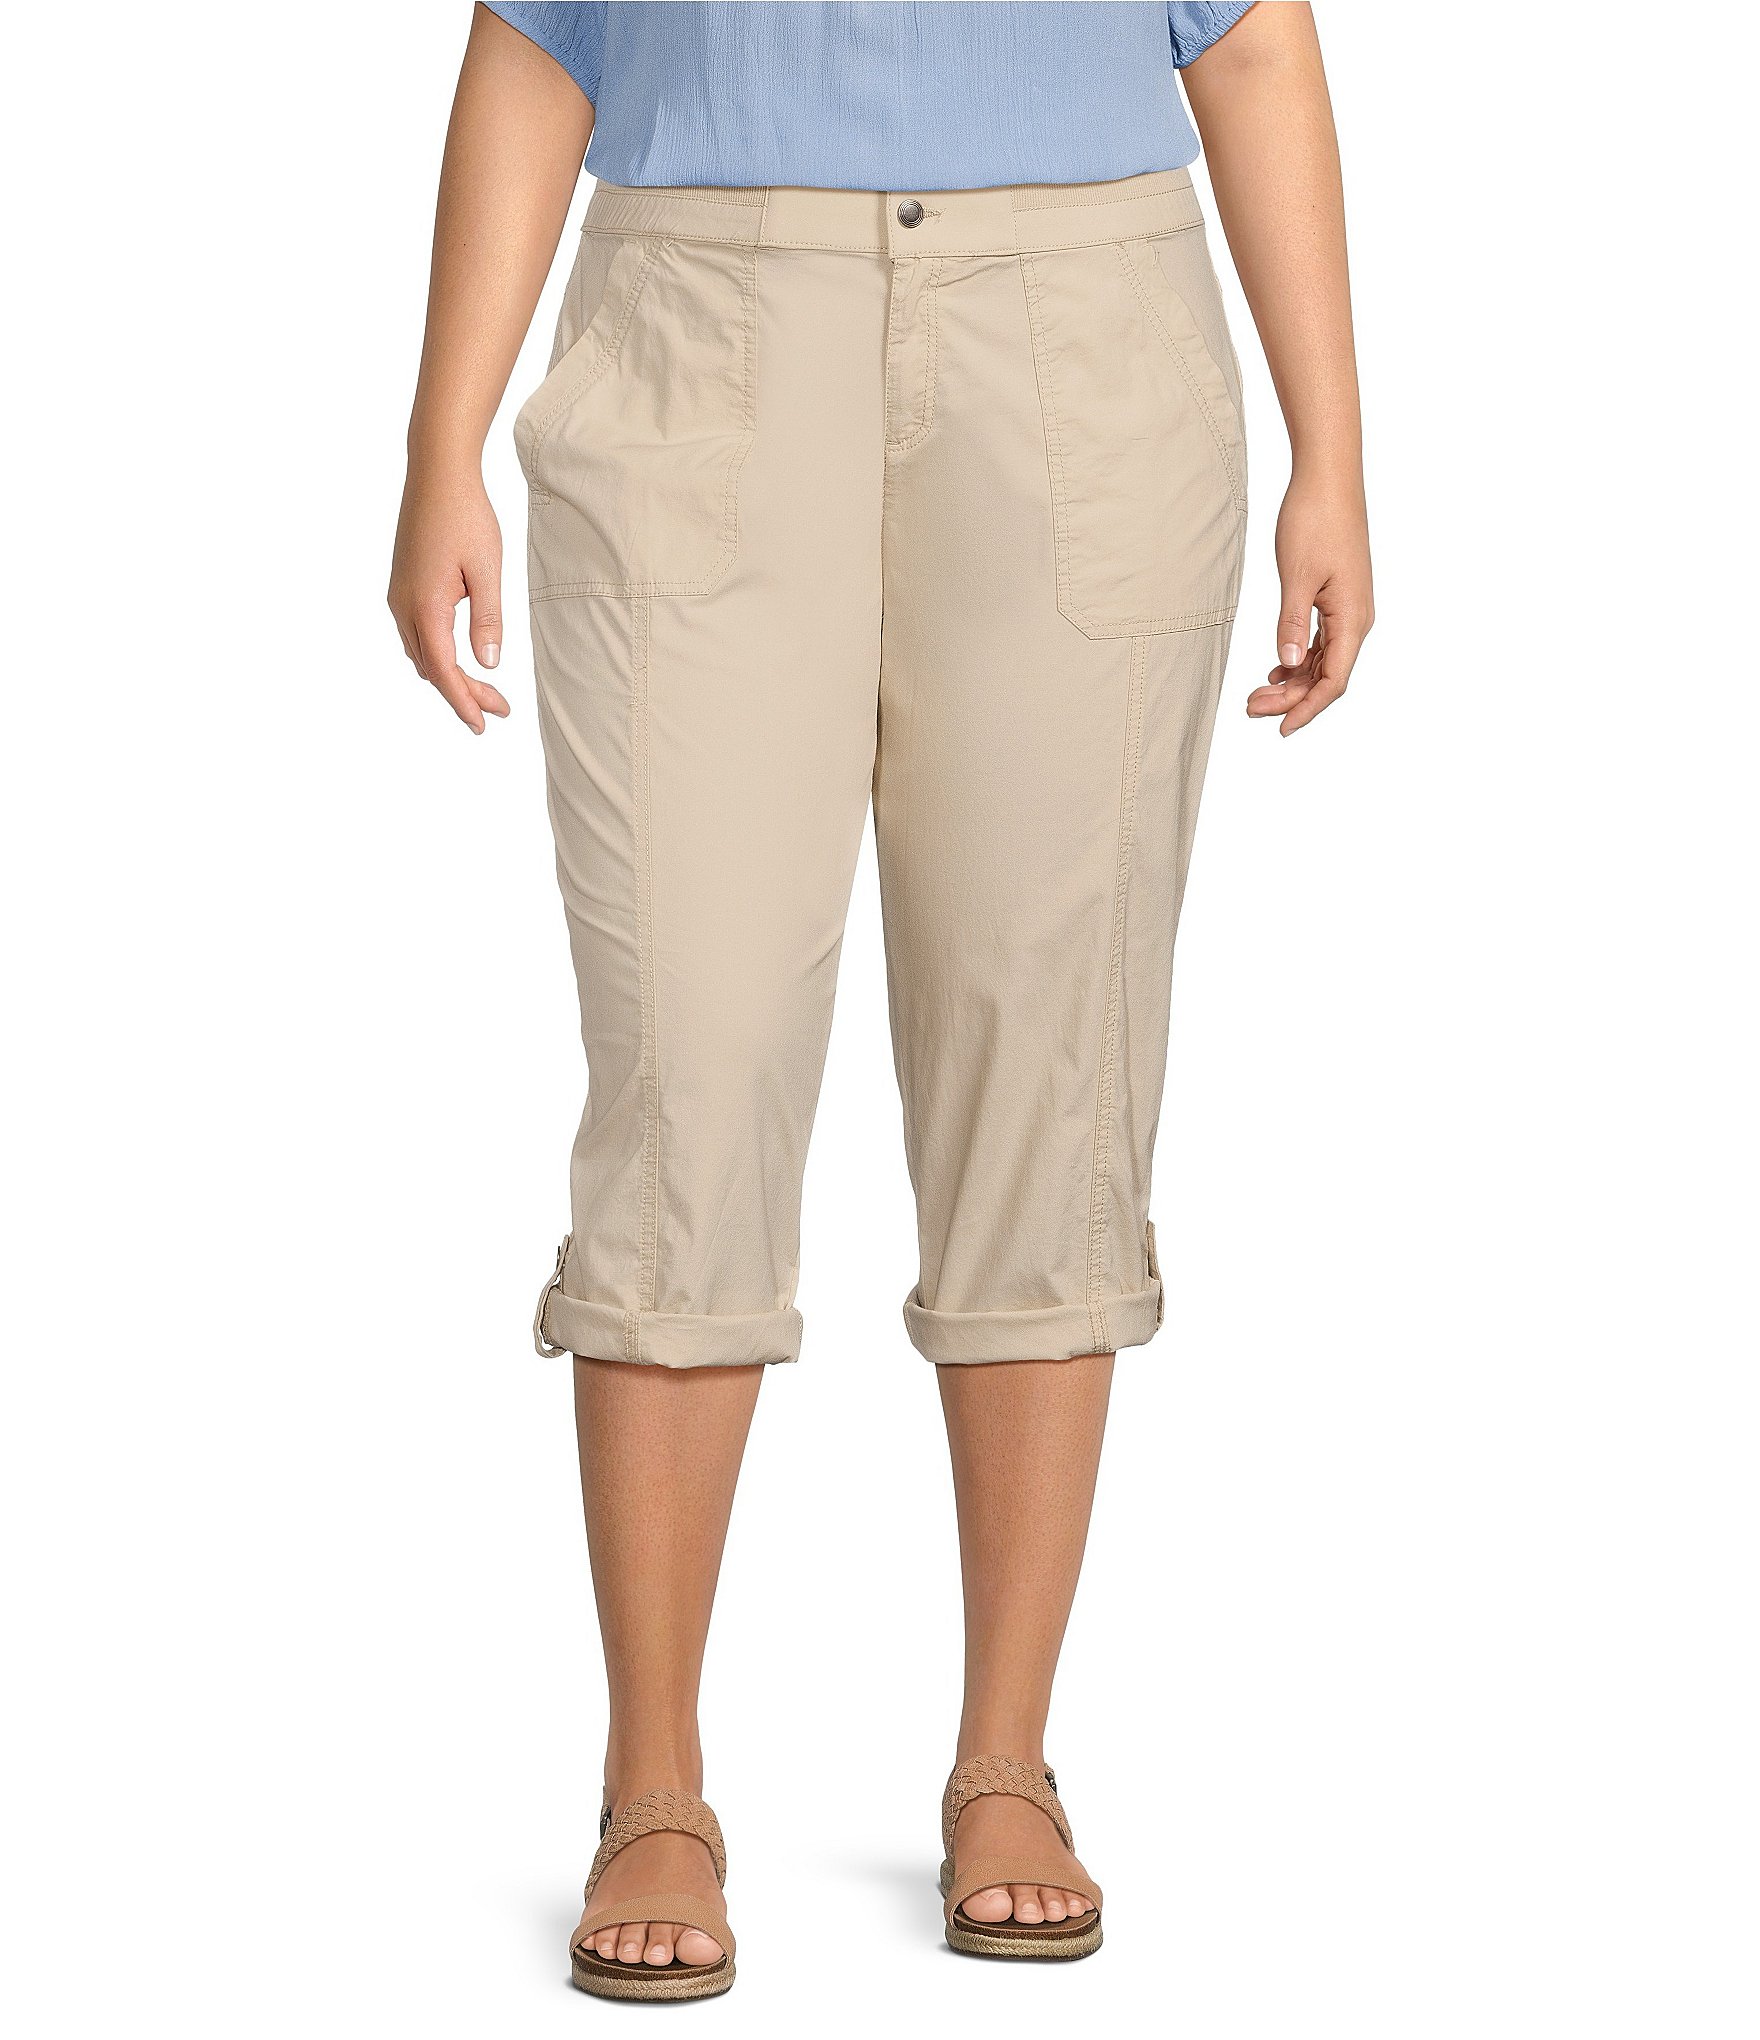 Buy AvoDovA Linen Pants for Women Capri Pants Elastic Waist Pant with Pocket  Loose Harem Pants Printed Crop Pants 3dark Khaki 3XLarge at Amazonin